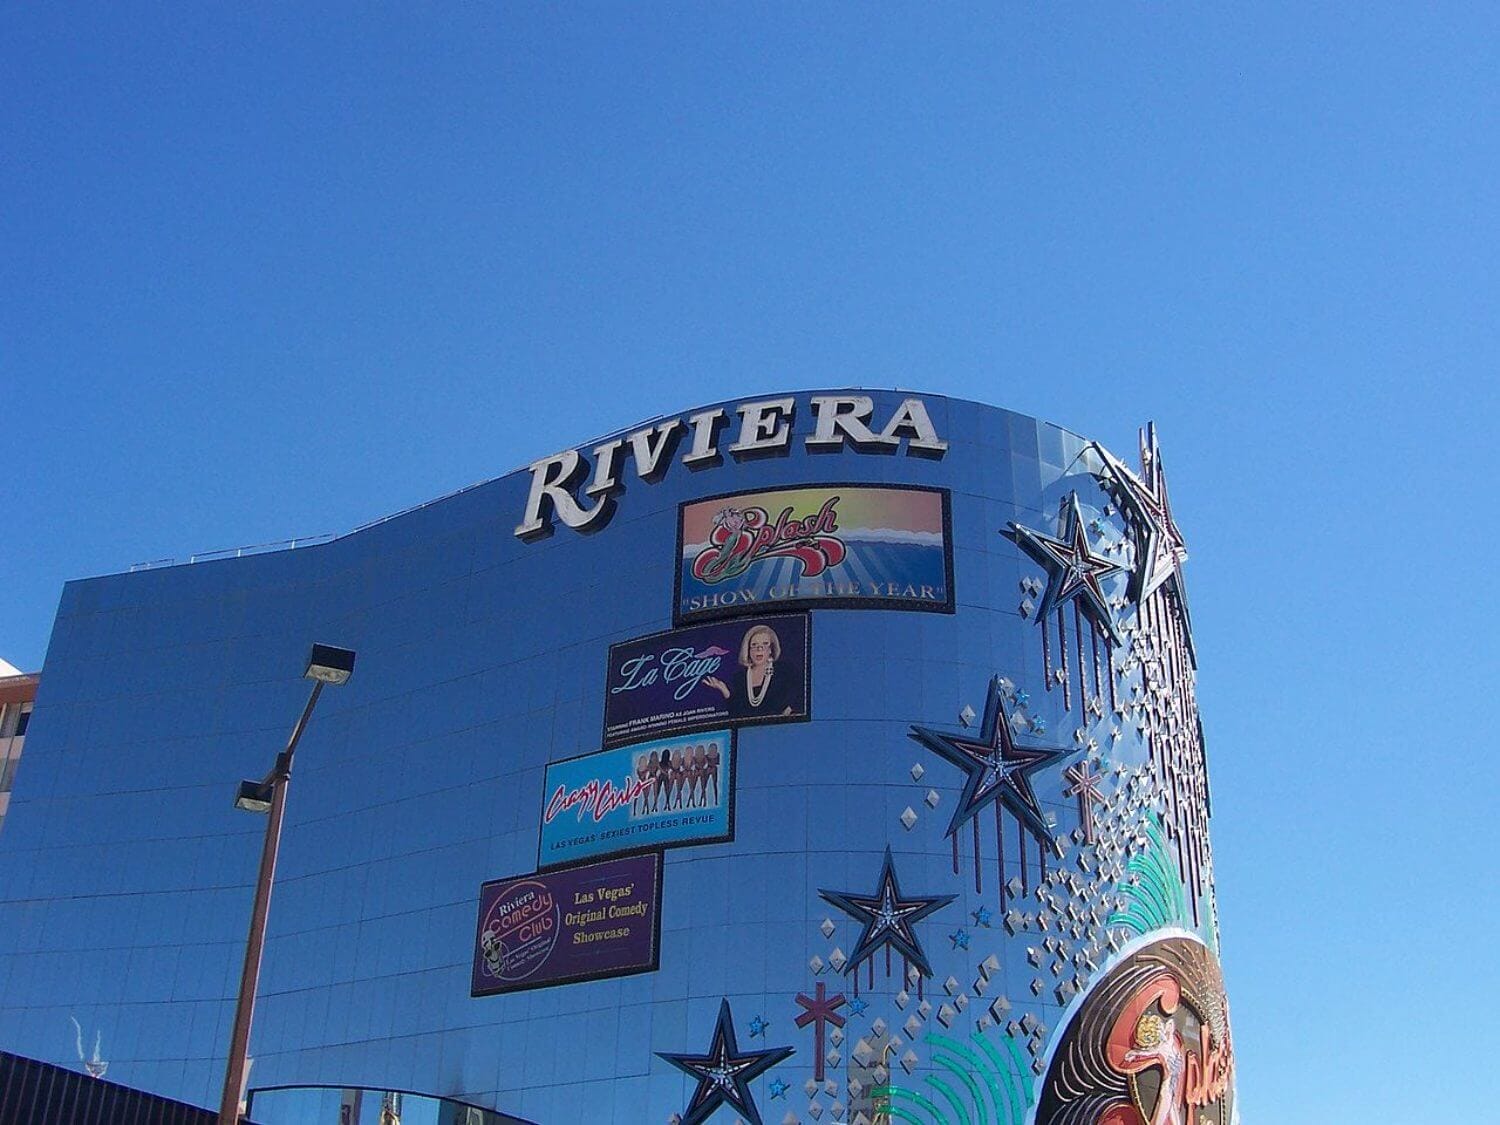 Hotel Riviera - Photo Wikimedia Commons by Michael180